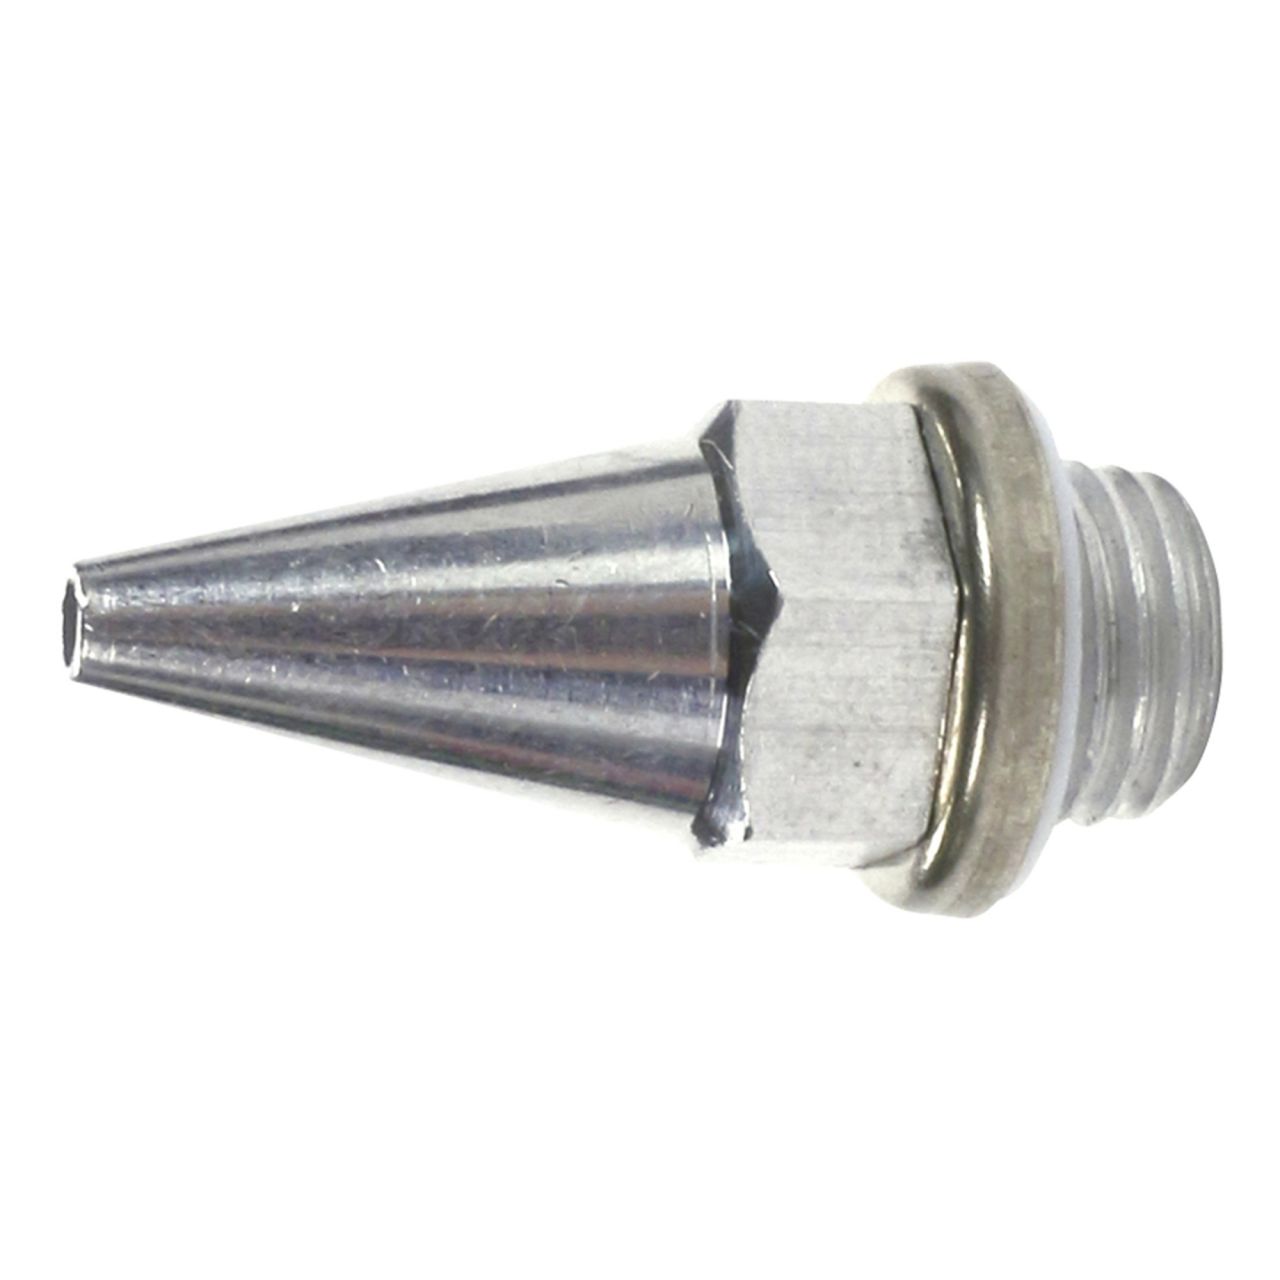 Boquilla Aluminio Ø2,5 mm - Estándar